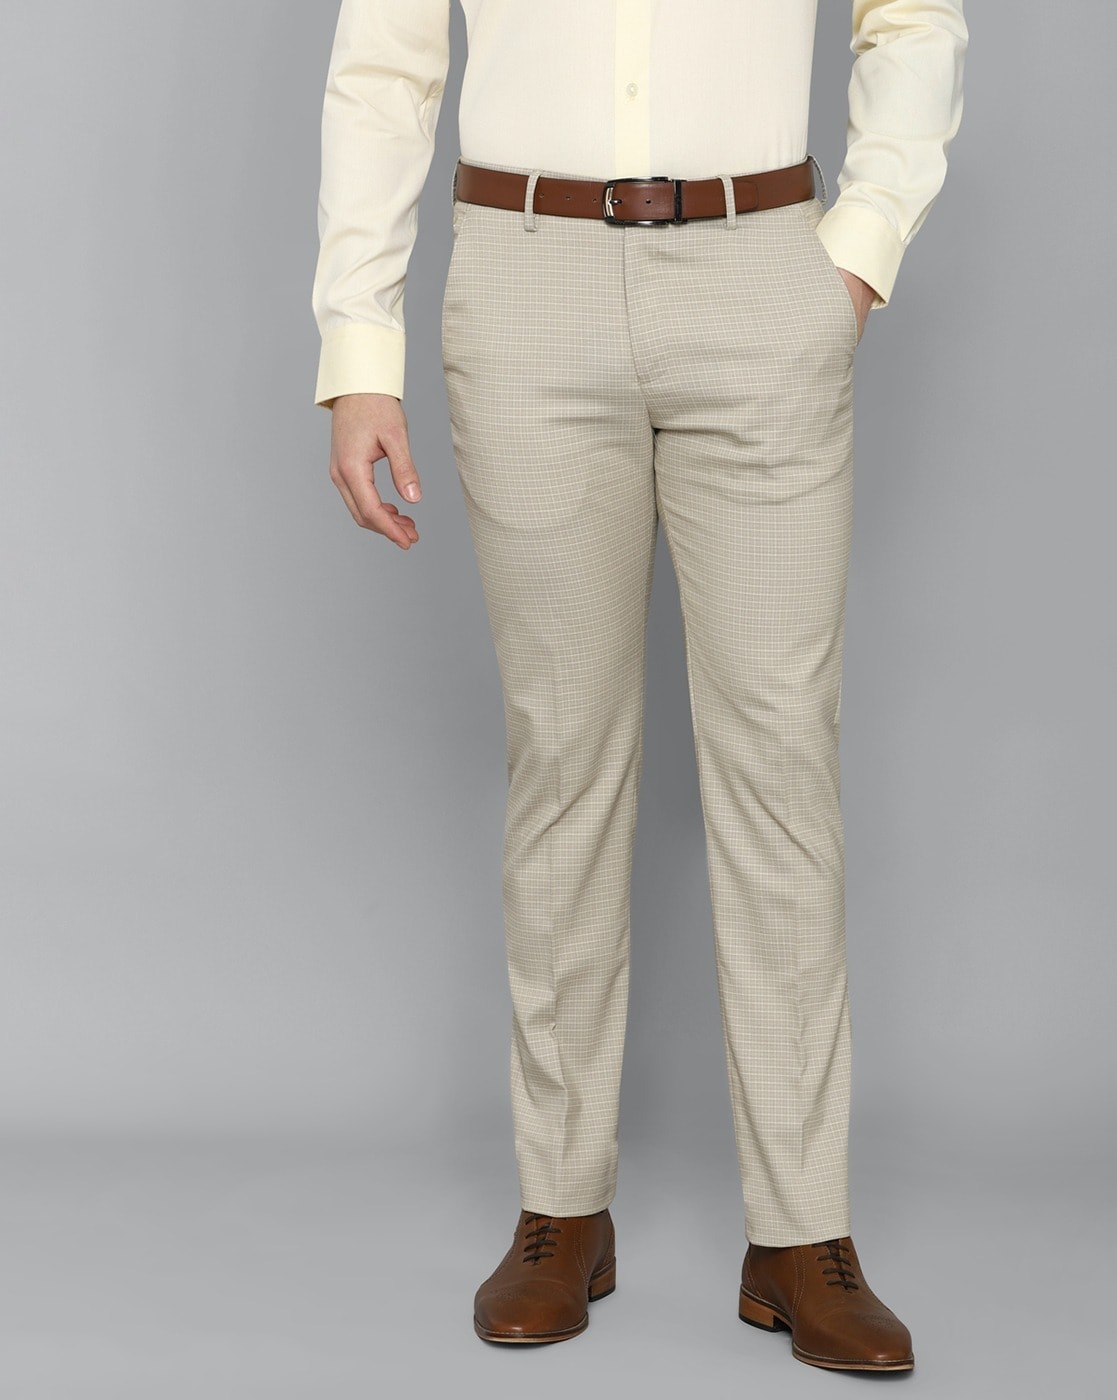 LOUIS PHILIPPE Slim Fit Men Grey Trousers  Buy LOUIS PHILIPPE Slim Fit Men  Grey Trousers Online at Best Prices in India  Flipkartcom